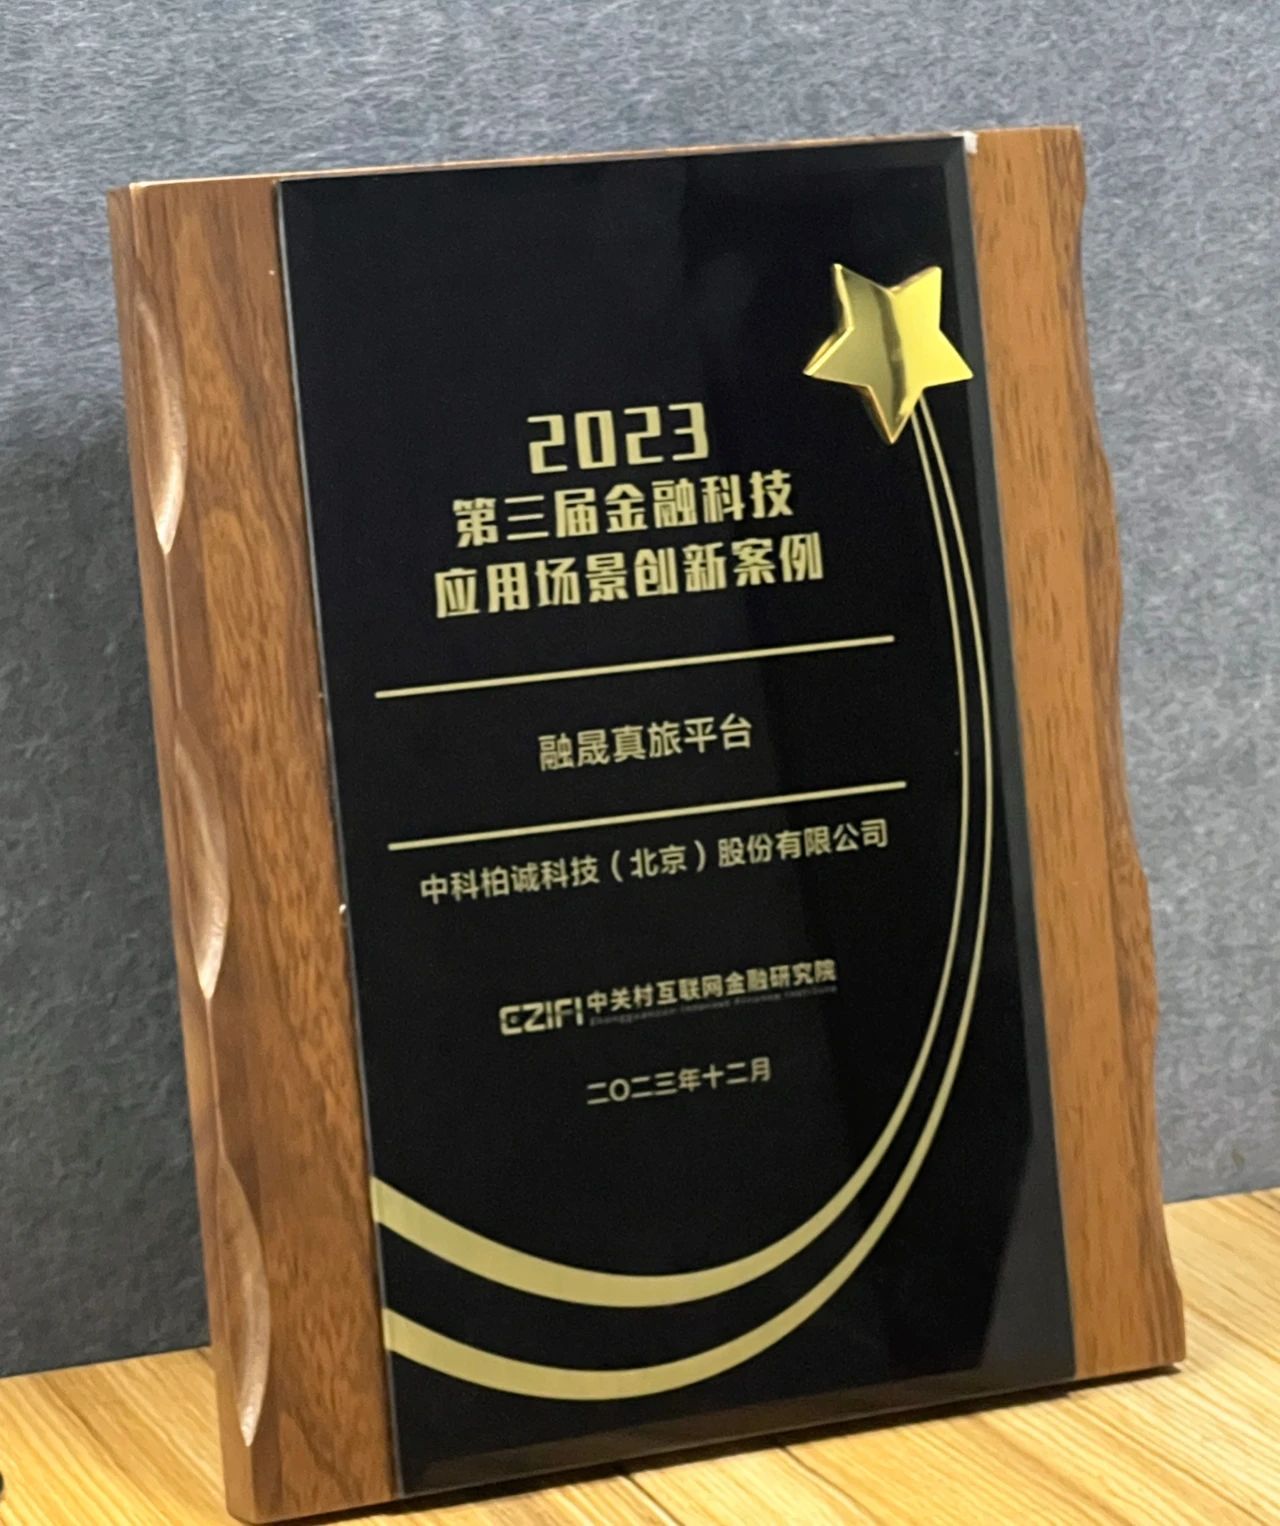 Sino-Parsons won the 3rd Financial Technology Application Scenario Innovation Case Award in 2023